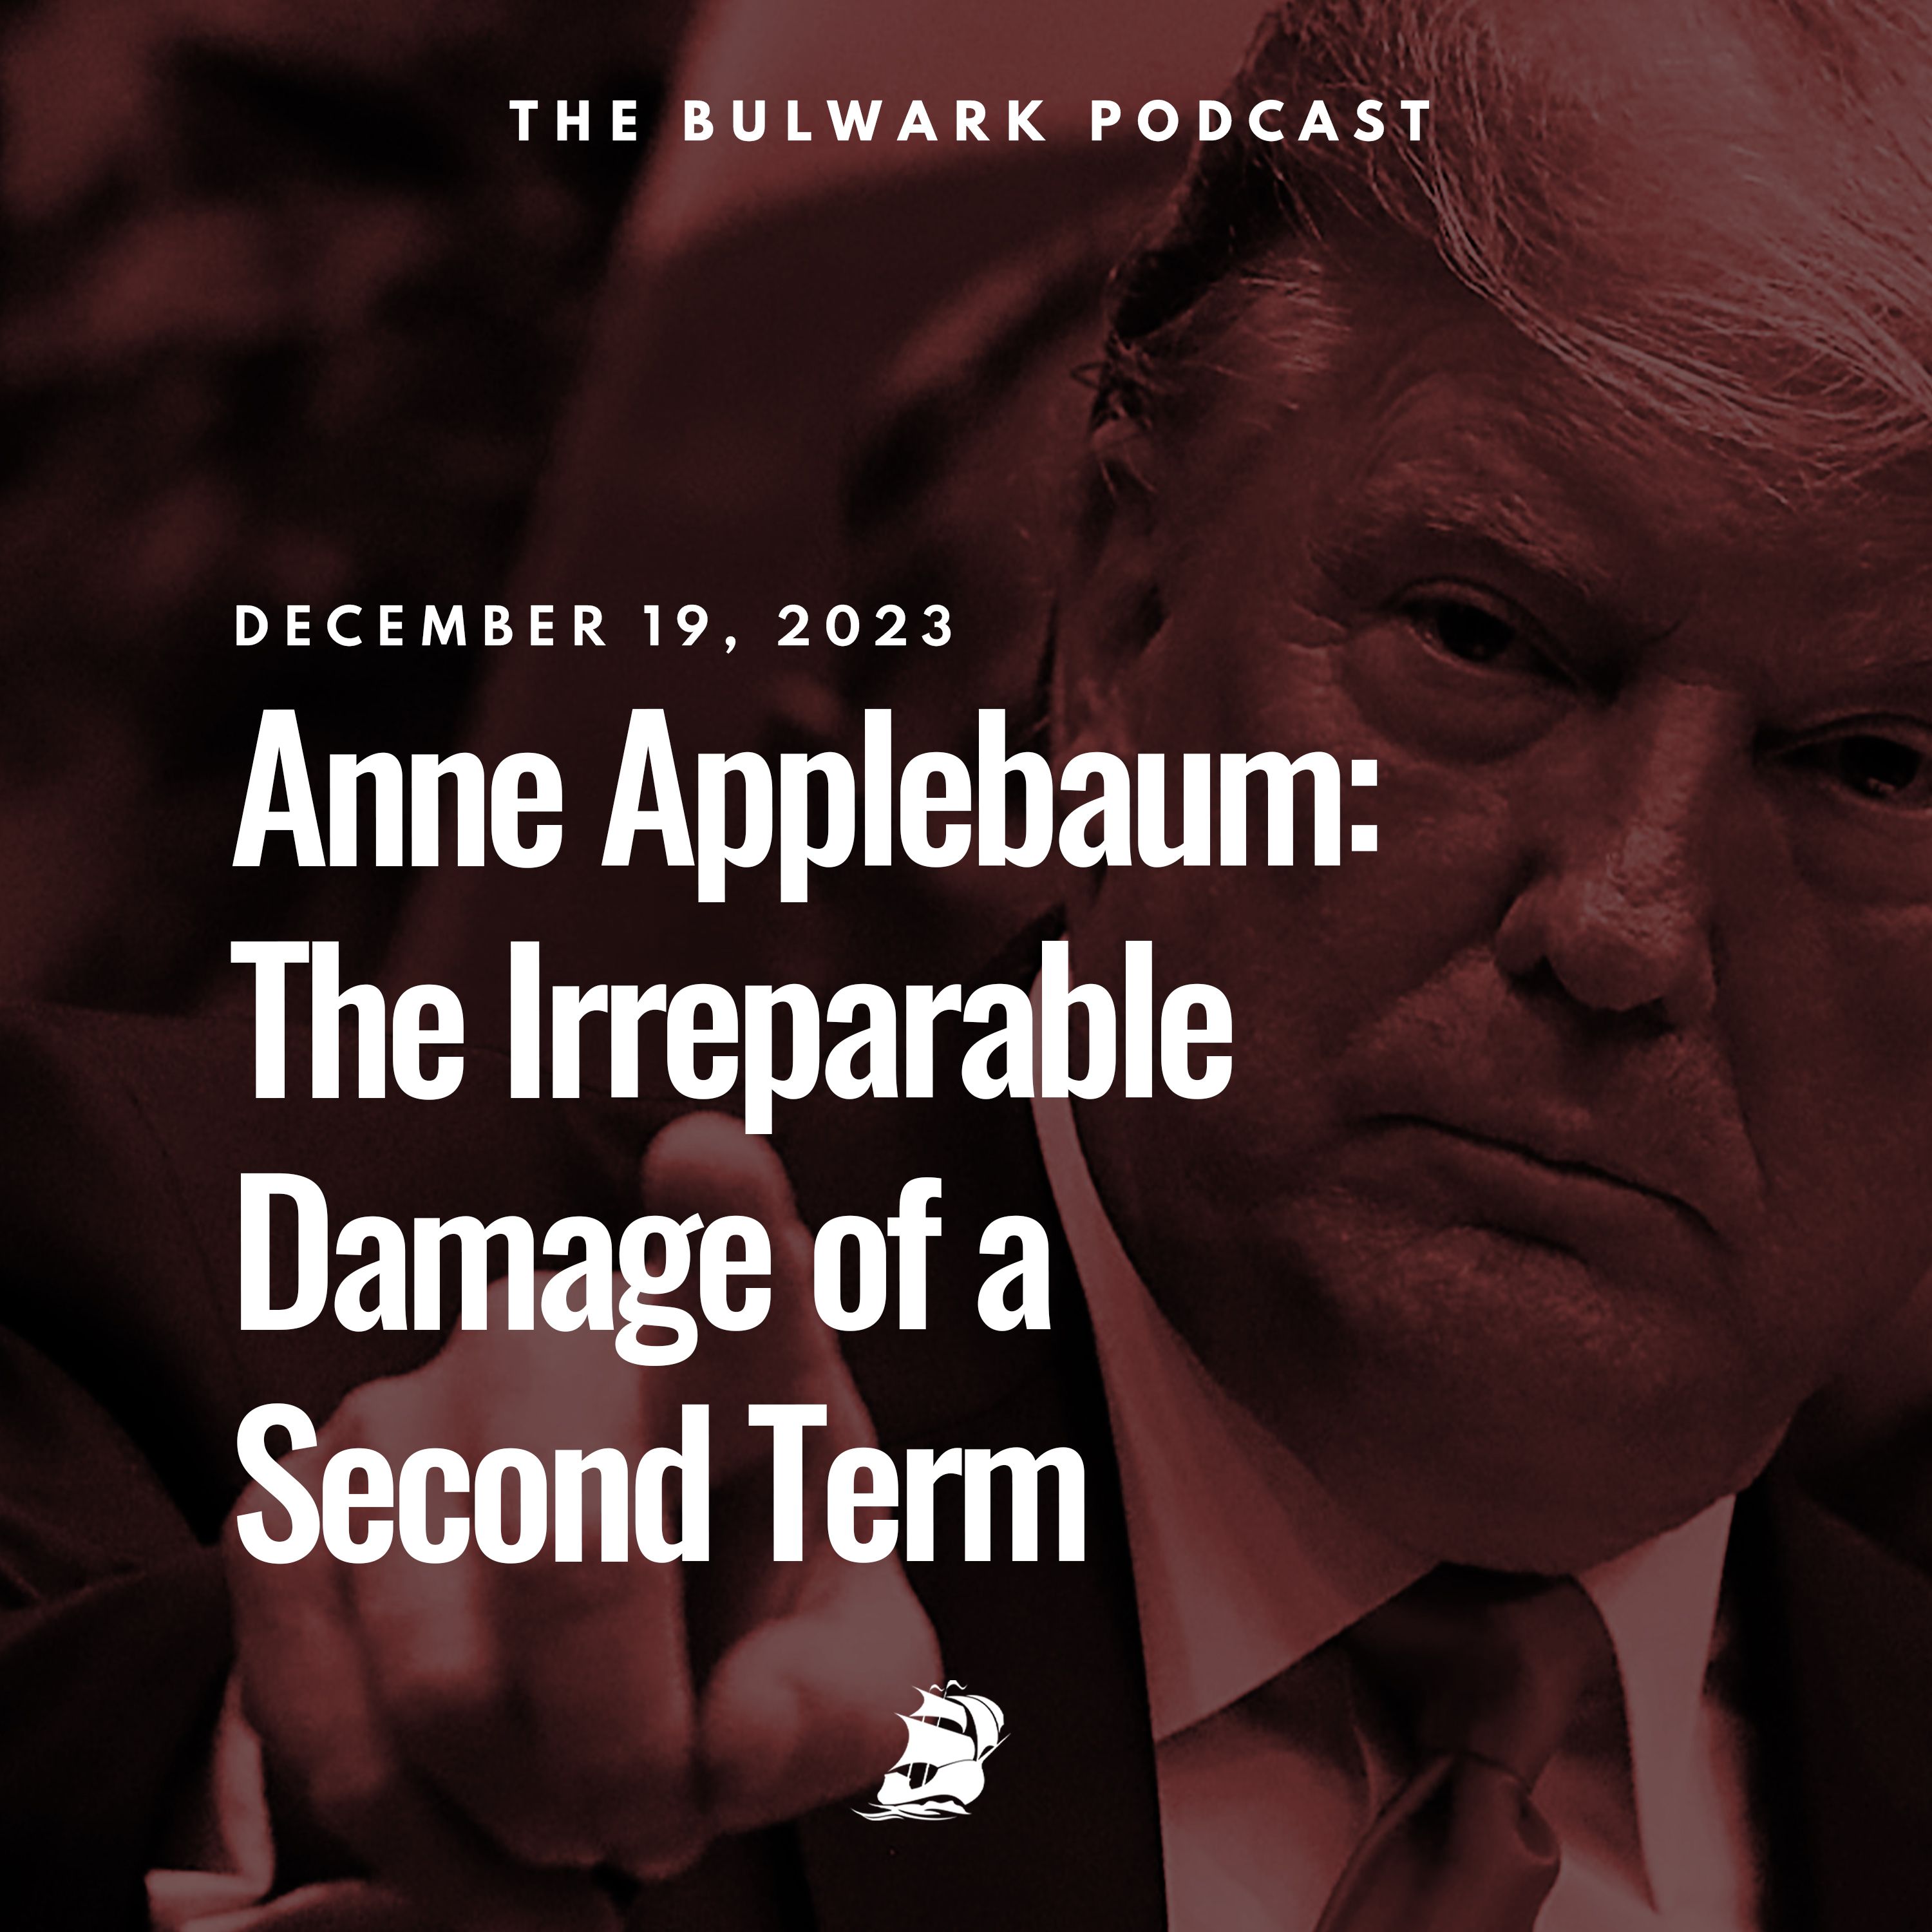 Anne Applebaum: The Irreparable Damage of a Second Term